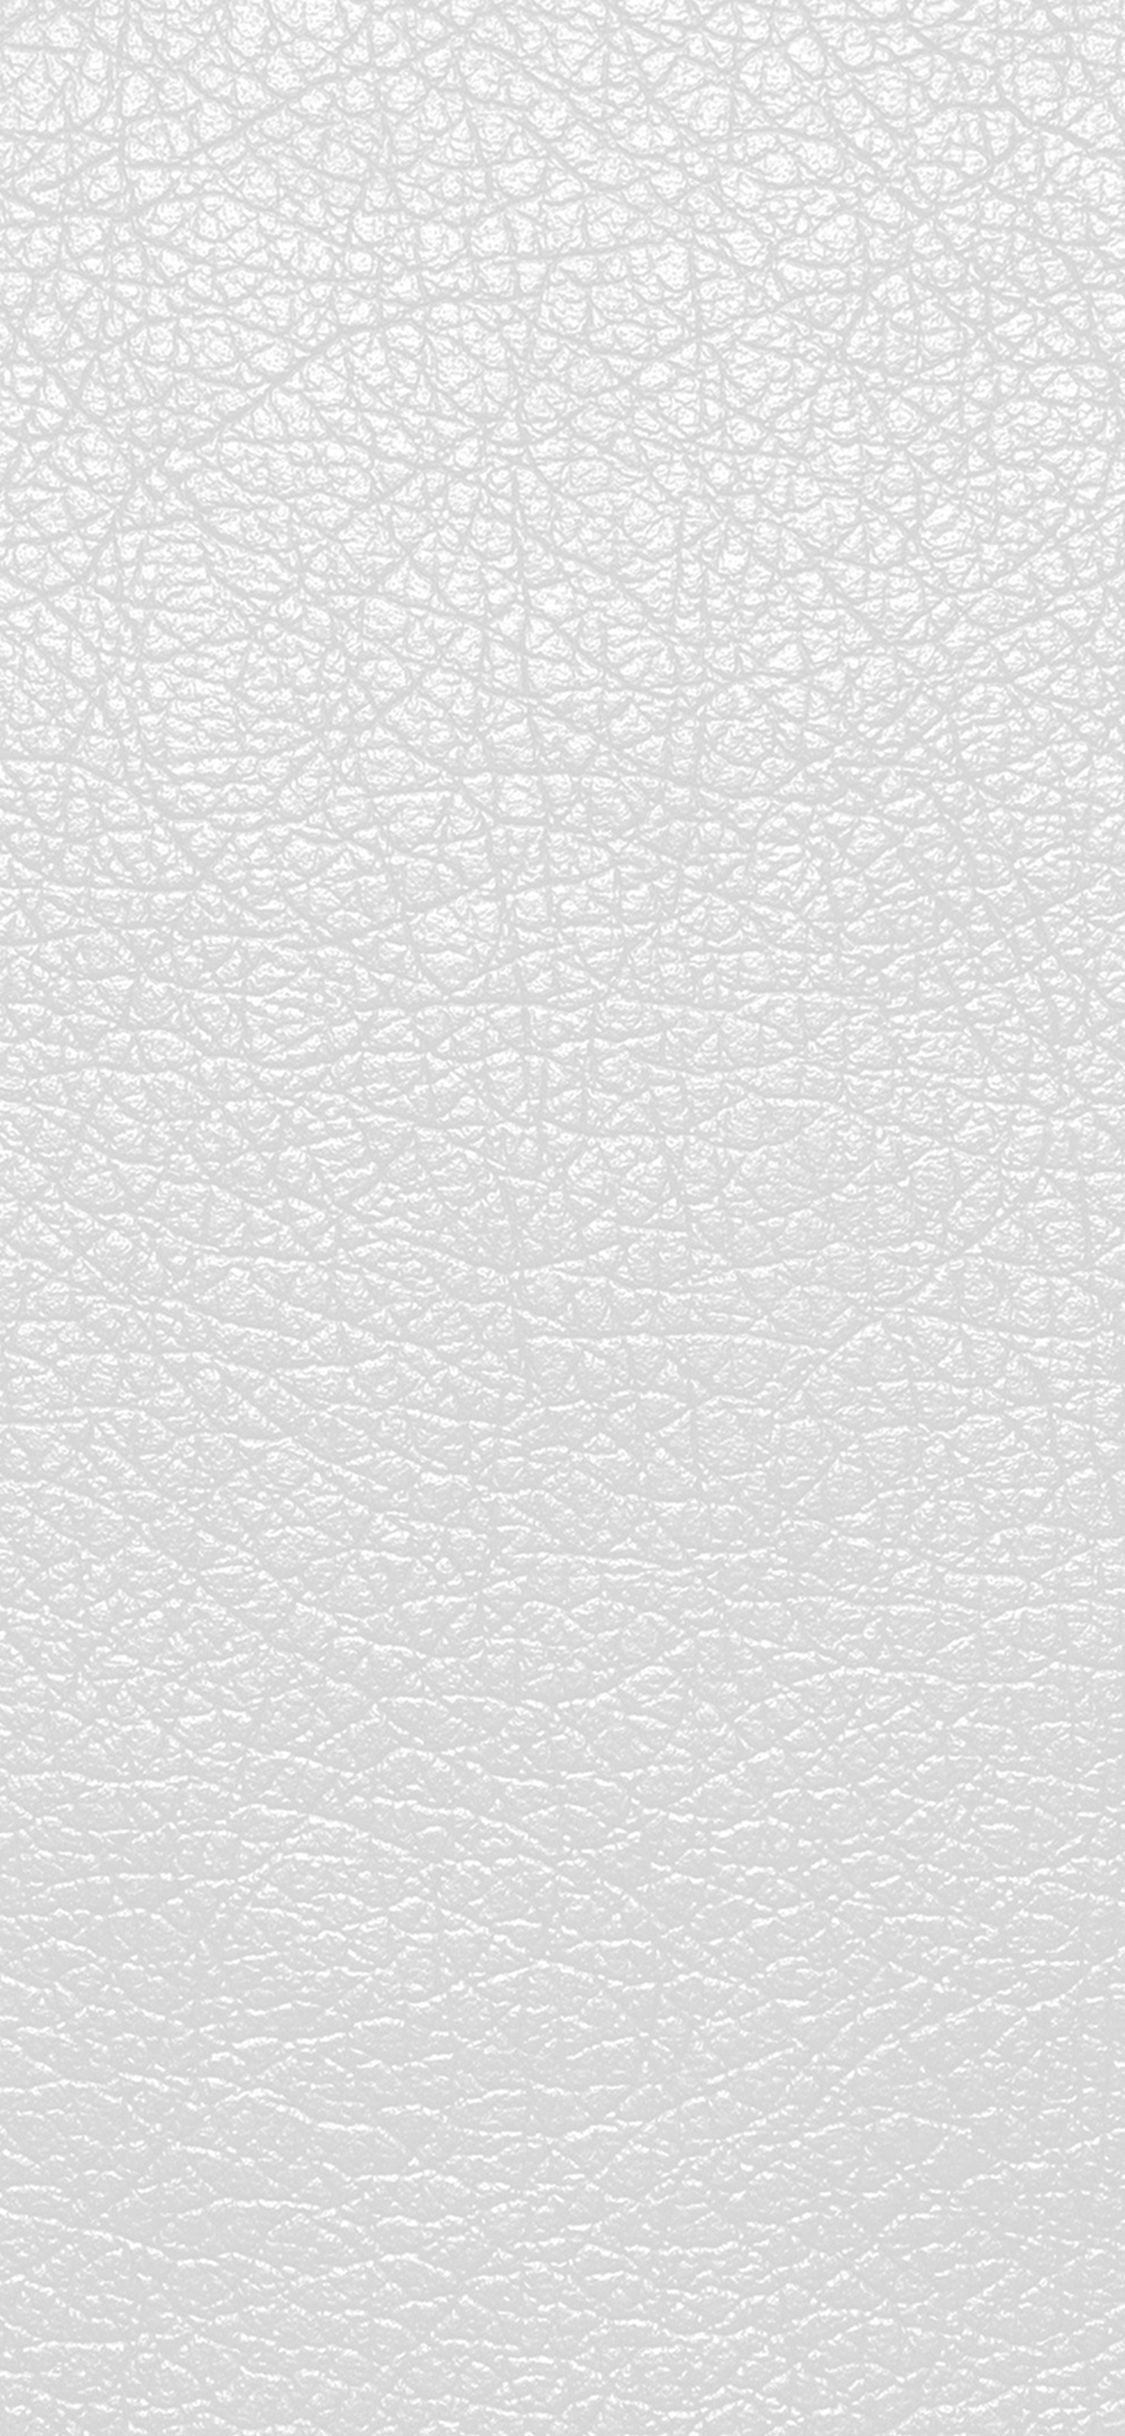 White Iphone Wallpaper Hd Original - bmp-central